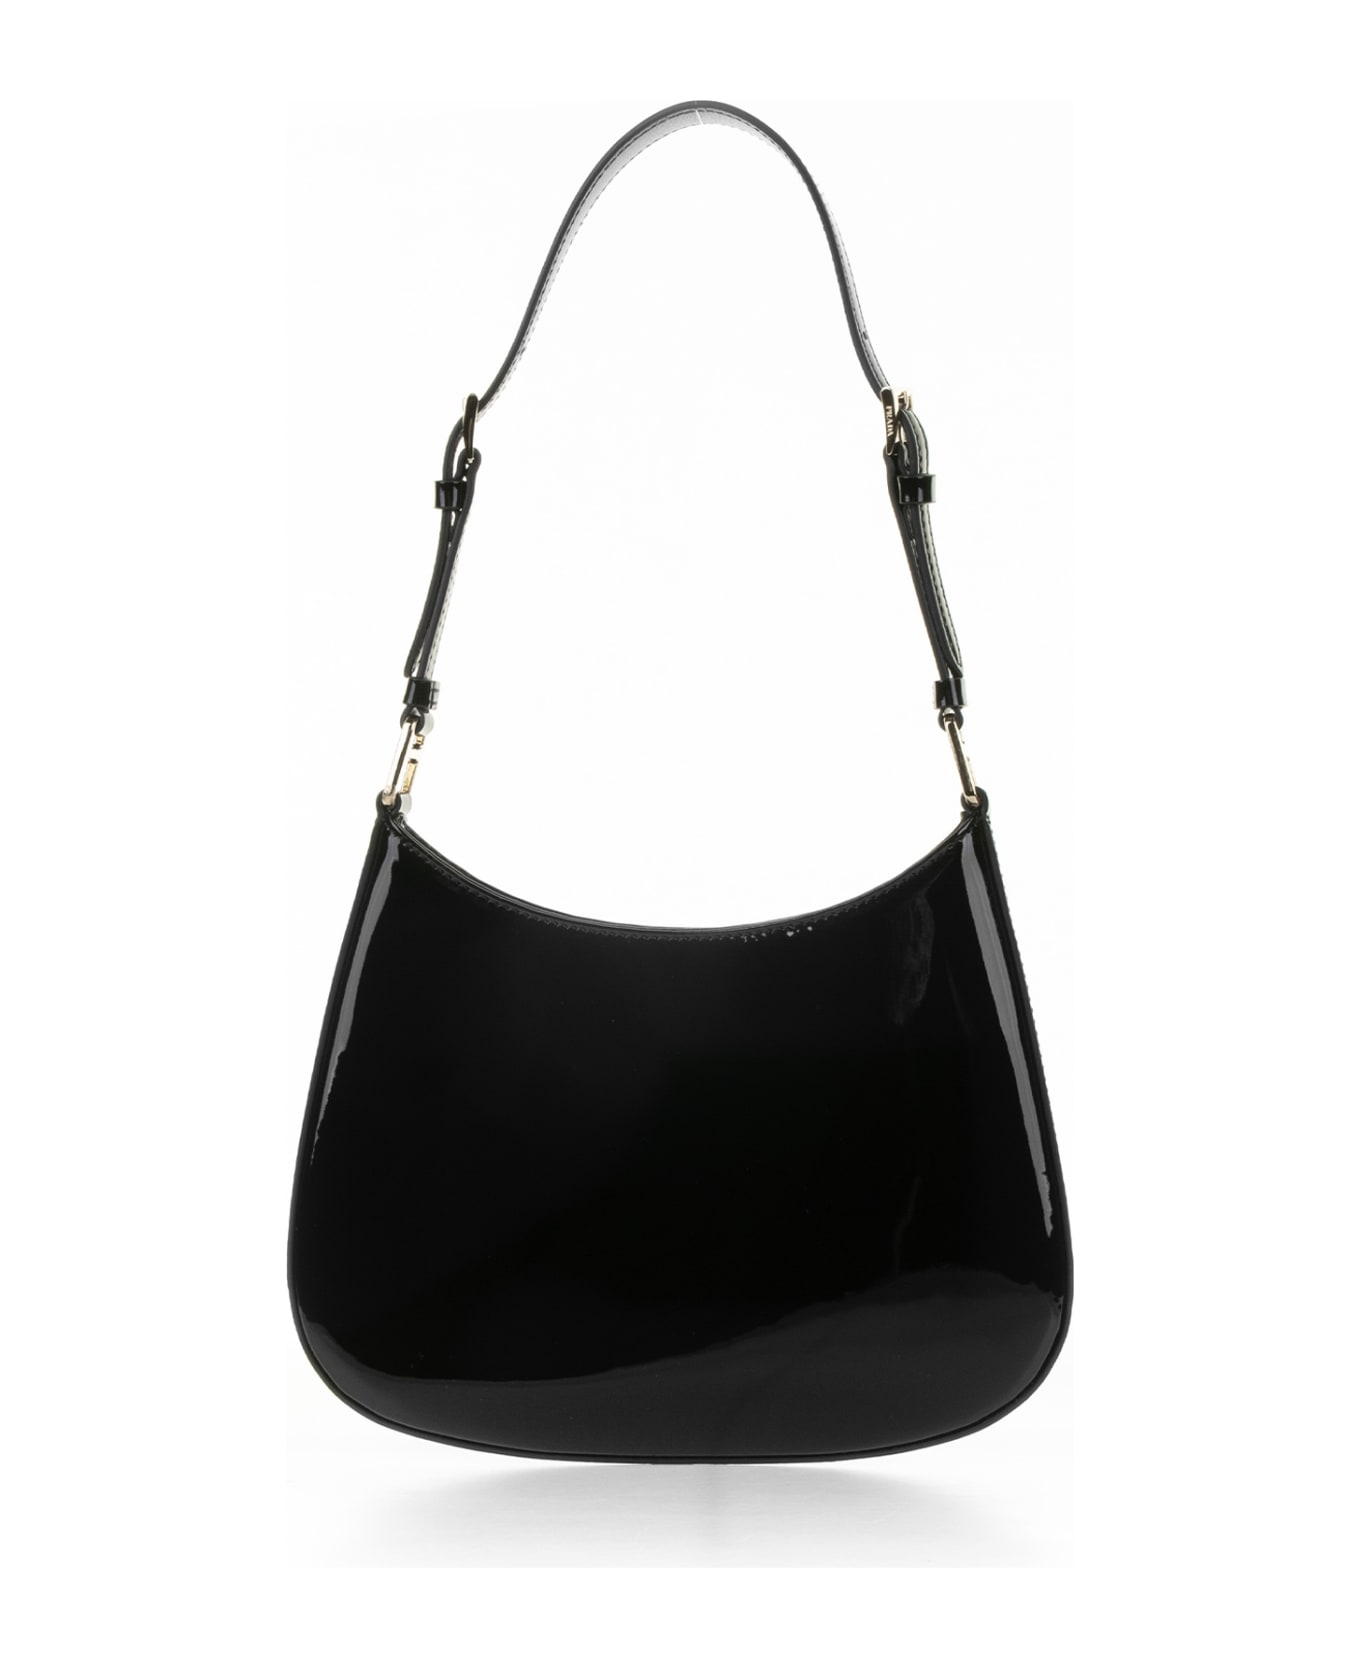 Prada Cleo Bag In Patent Leather - NERO RUBINO